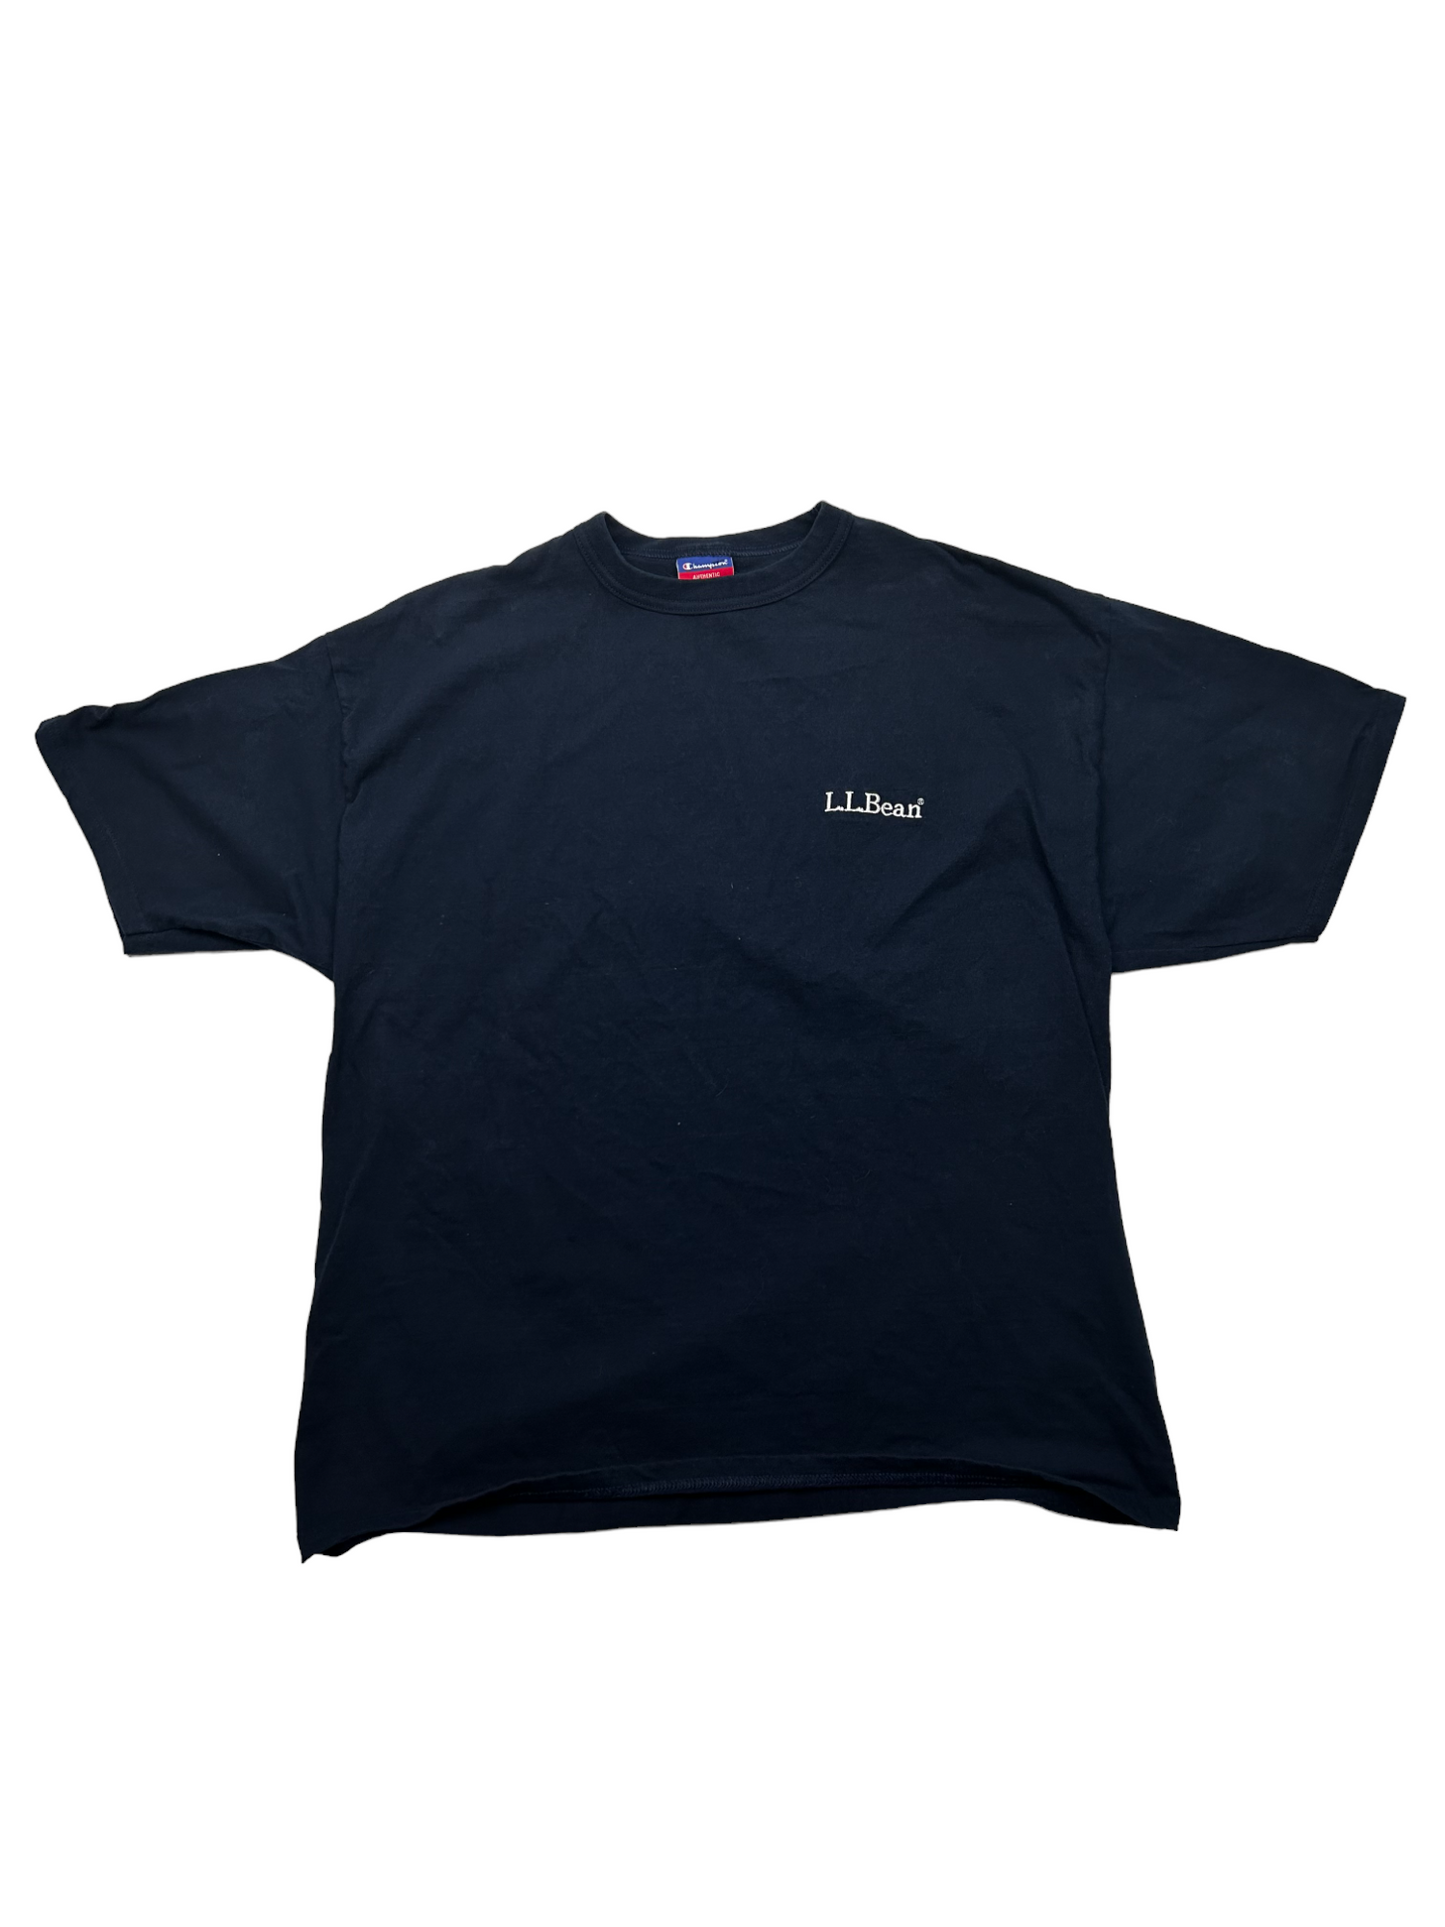 L.L. Bean Blue T-Shirt